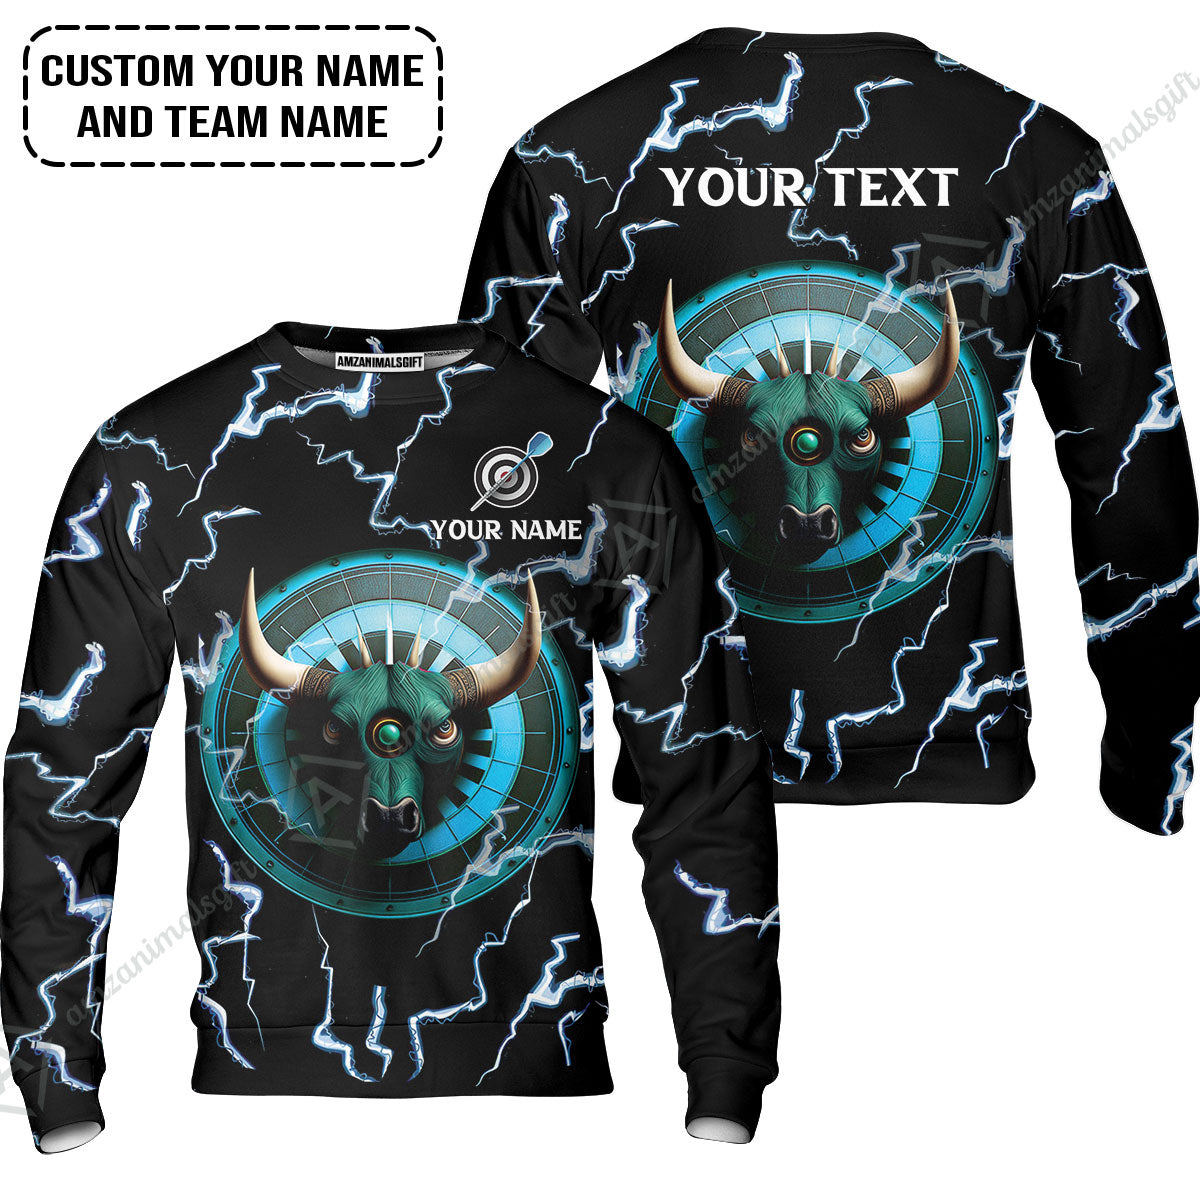 Customized Name & Text Darts Sweatshirt, Personalized Name Bullseye Dartboard Sweatshirt